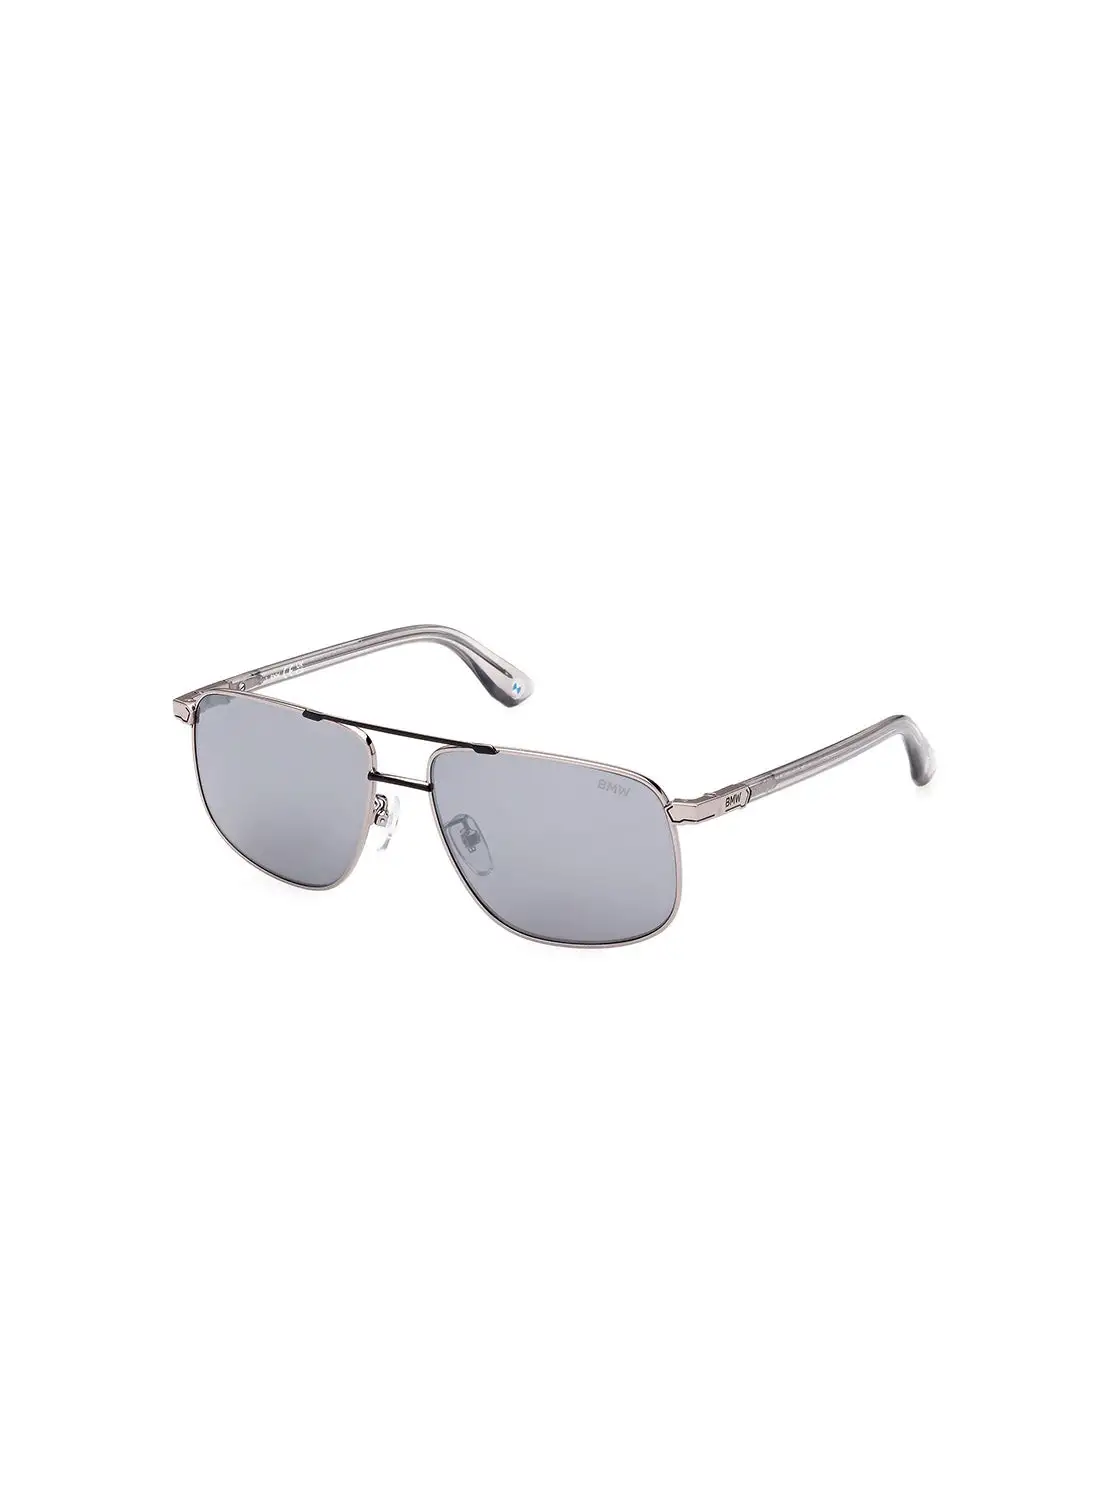 BMW Men's UV Protection Square Sunglasses - BW003116C57 - Lens Size: 57 Mm